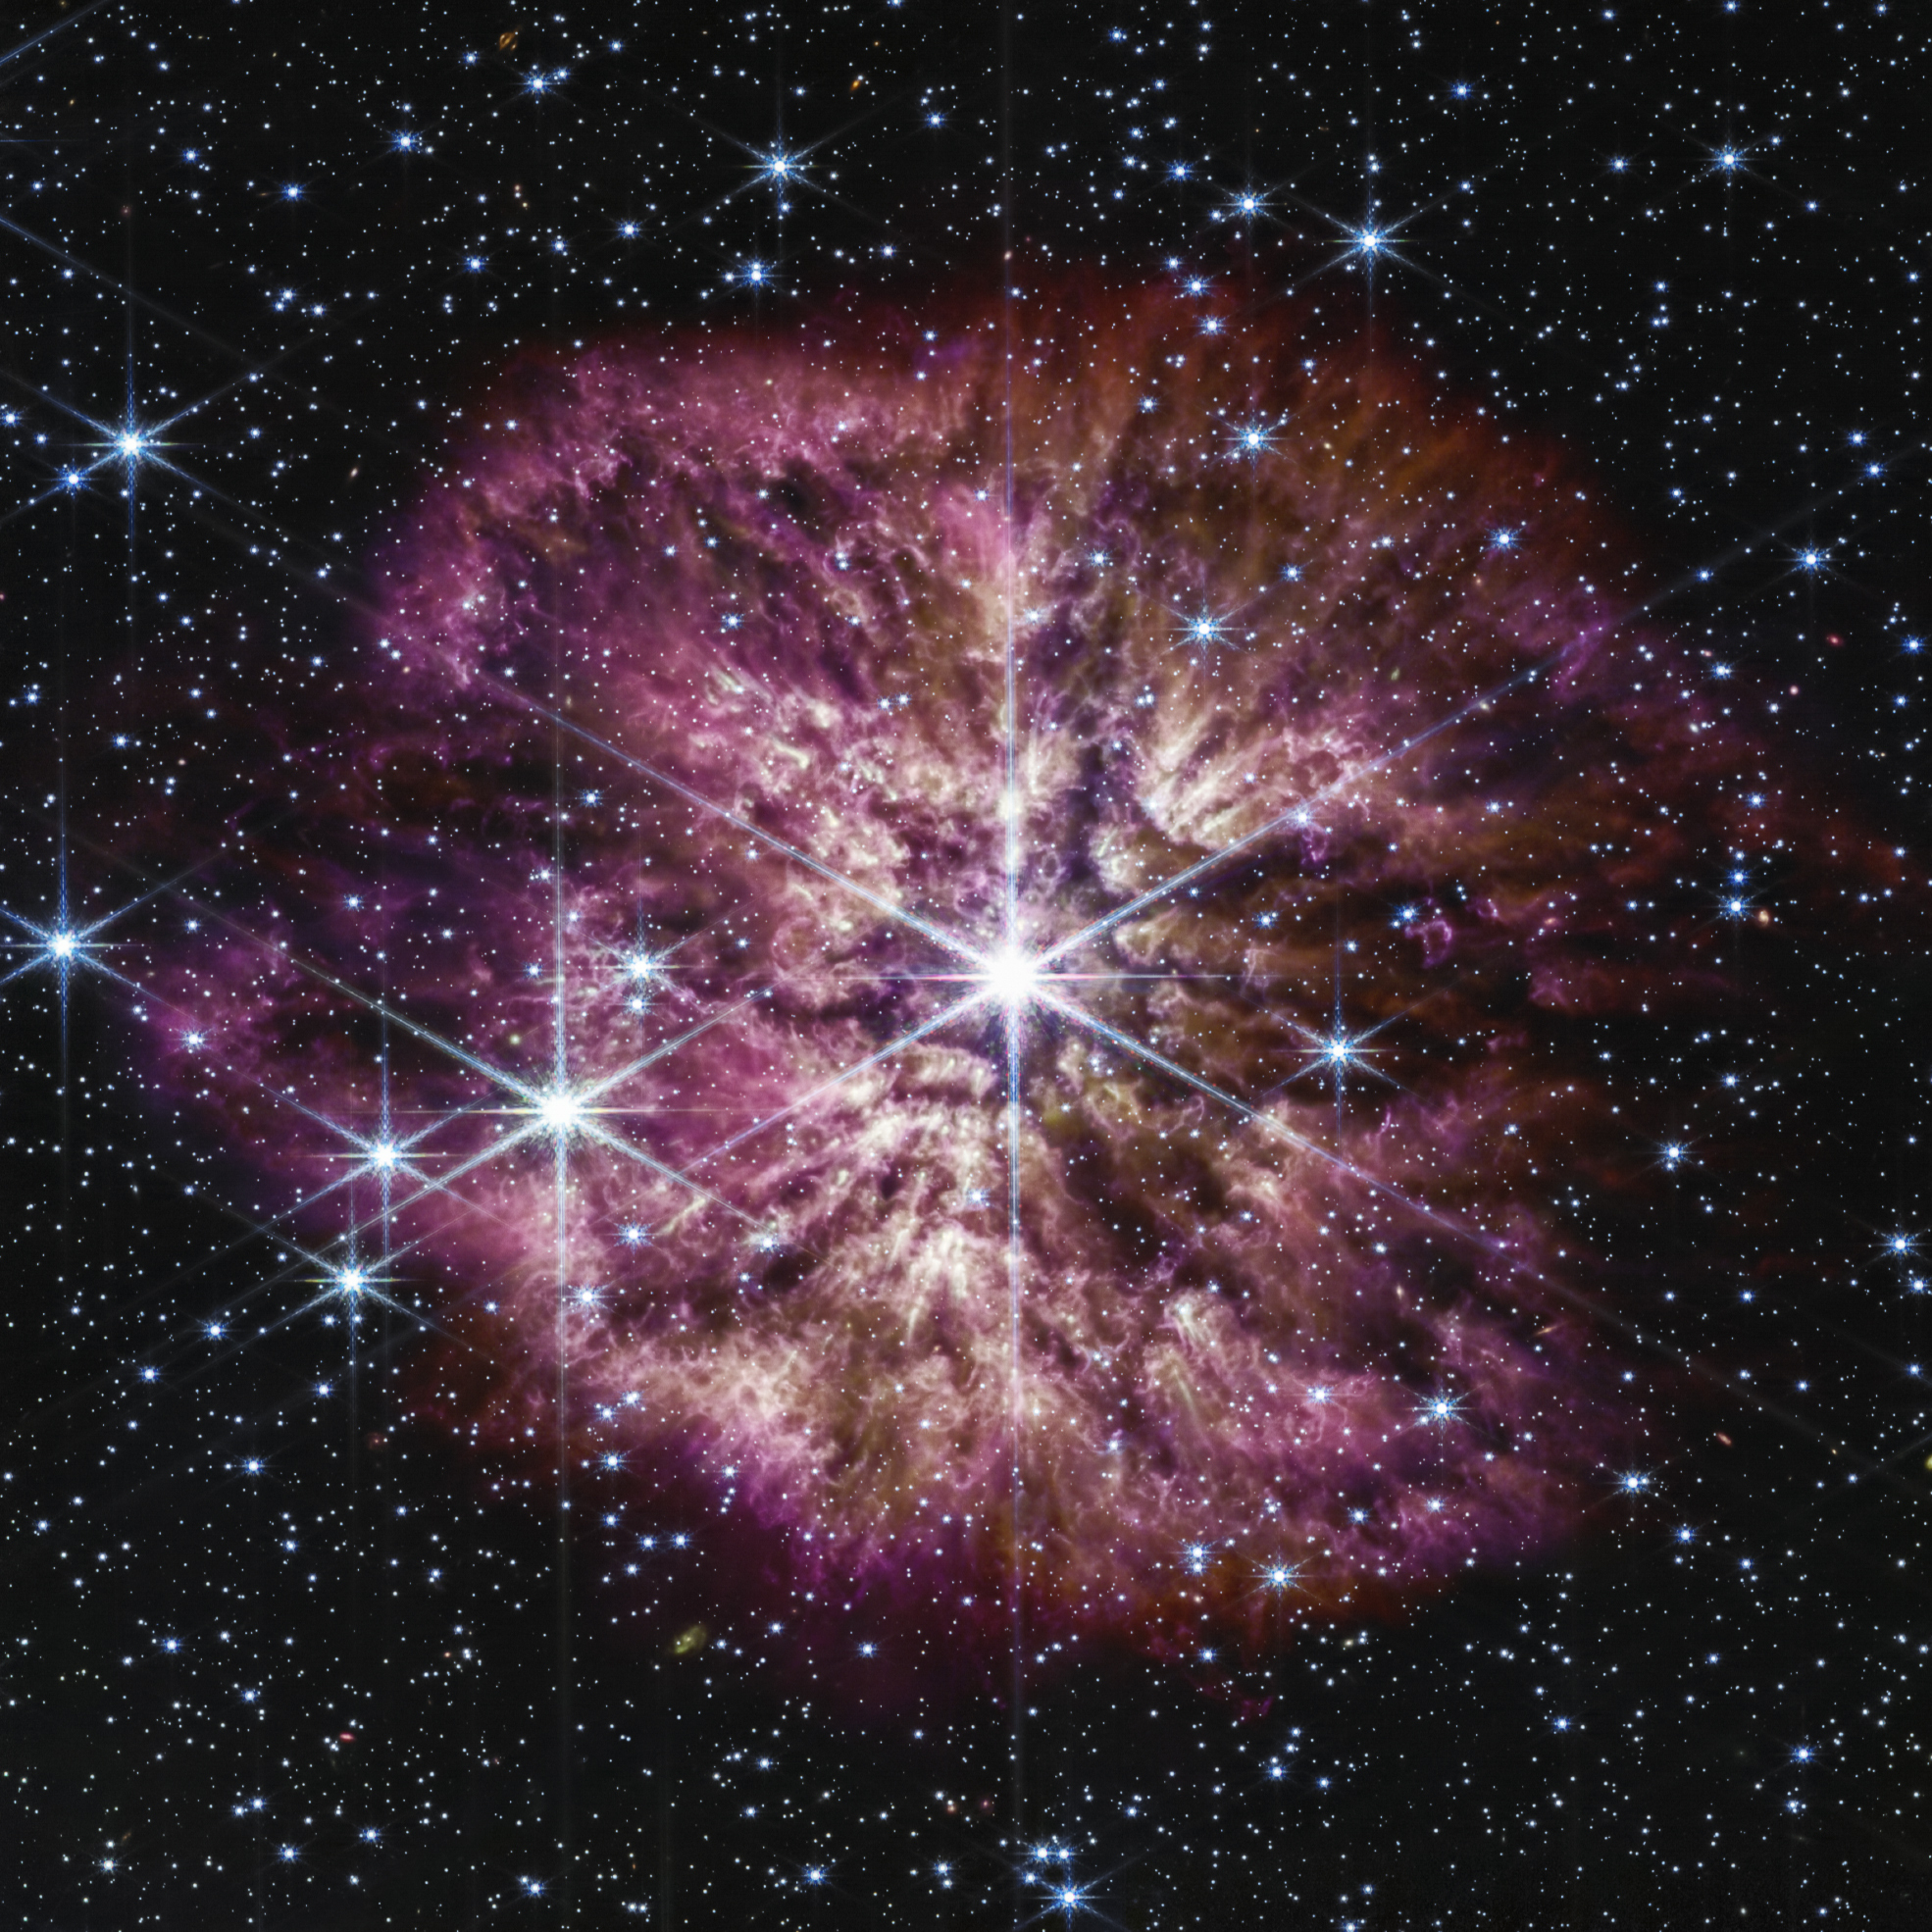 Webb telescope captures star going supernova on cusp of death